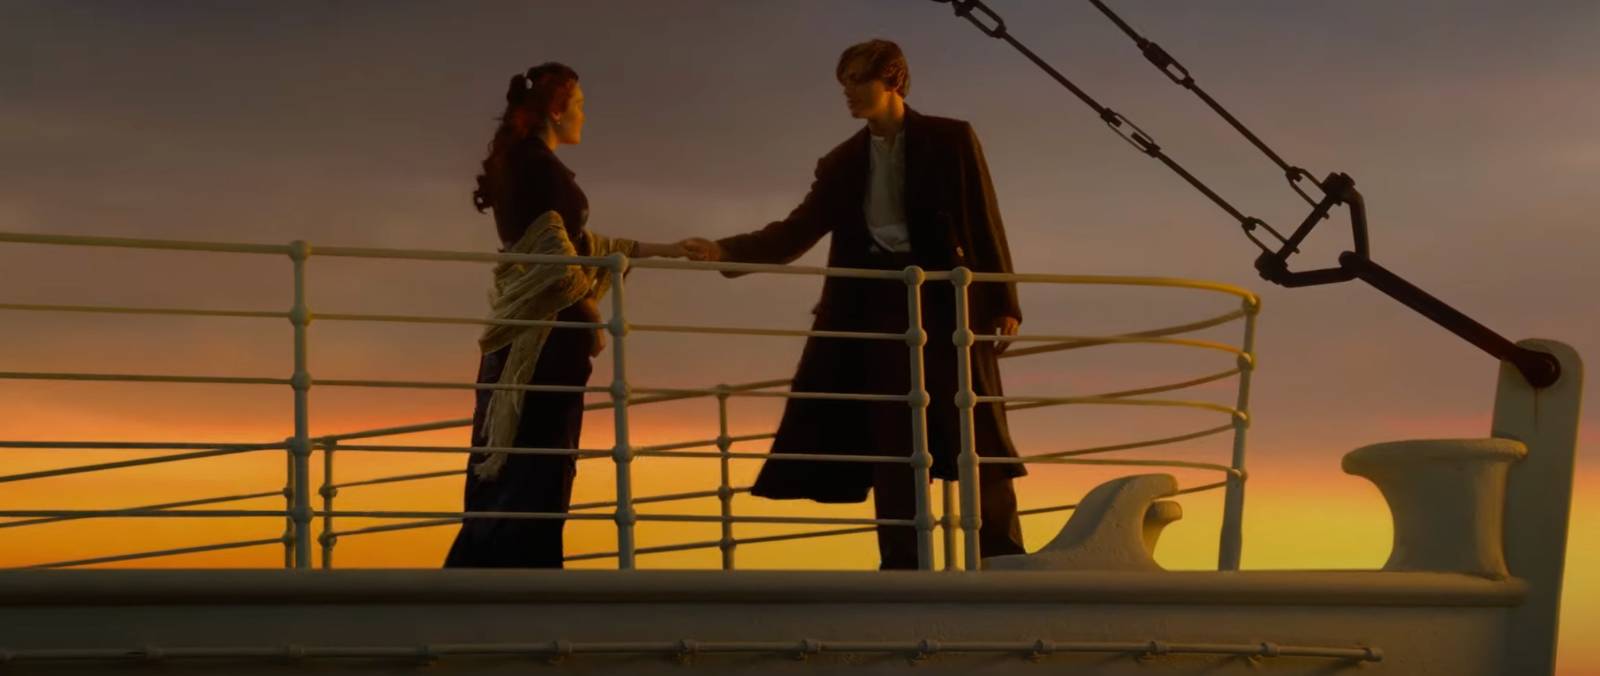 Generation Star Wars: Titanic returns to the big screen in 4K 3D